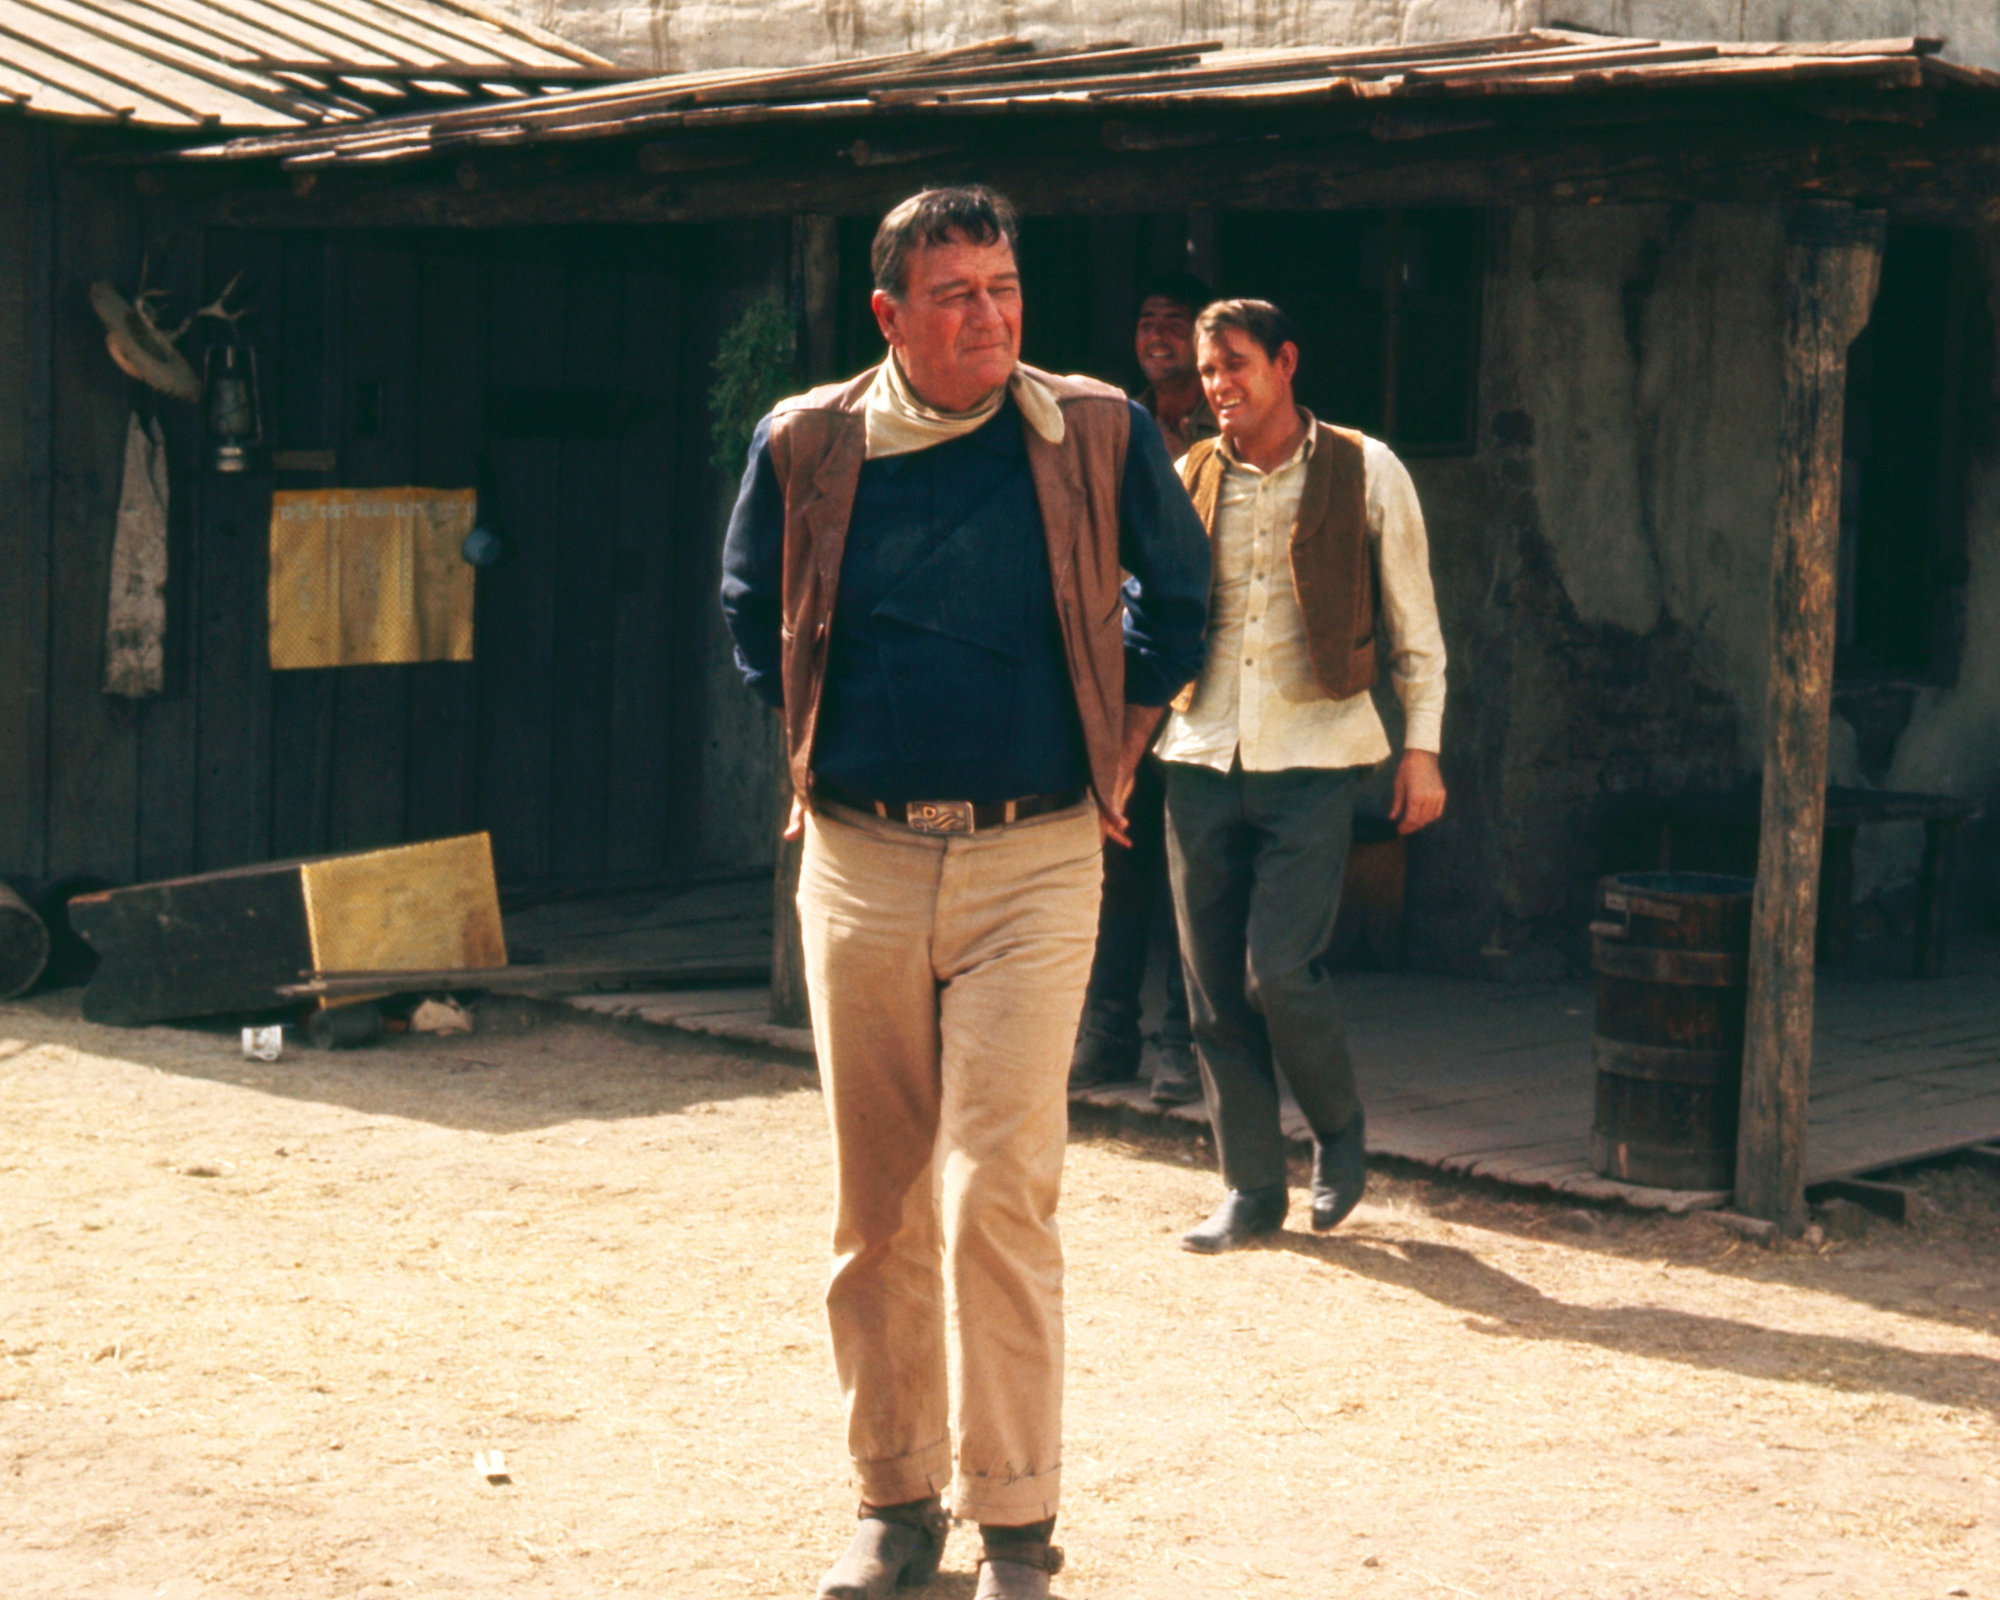 'The Sons of Katie Elder' John Wayne as John Elder and Earl Holliman as Matt Elder in Western pants. They're walking outside of a house on a dirt road.